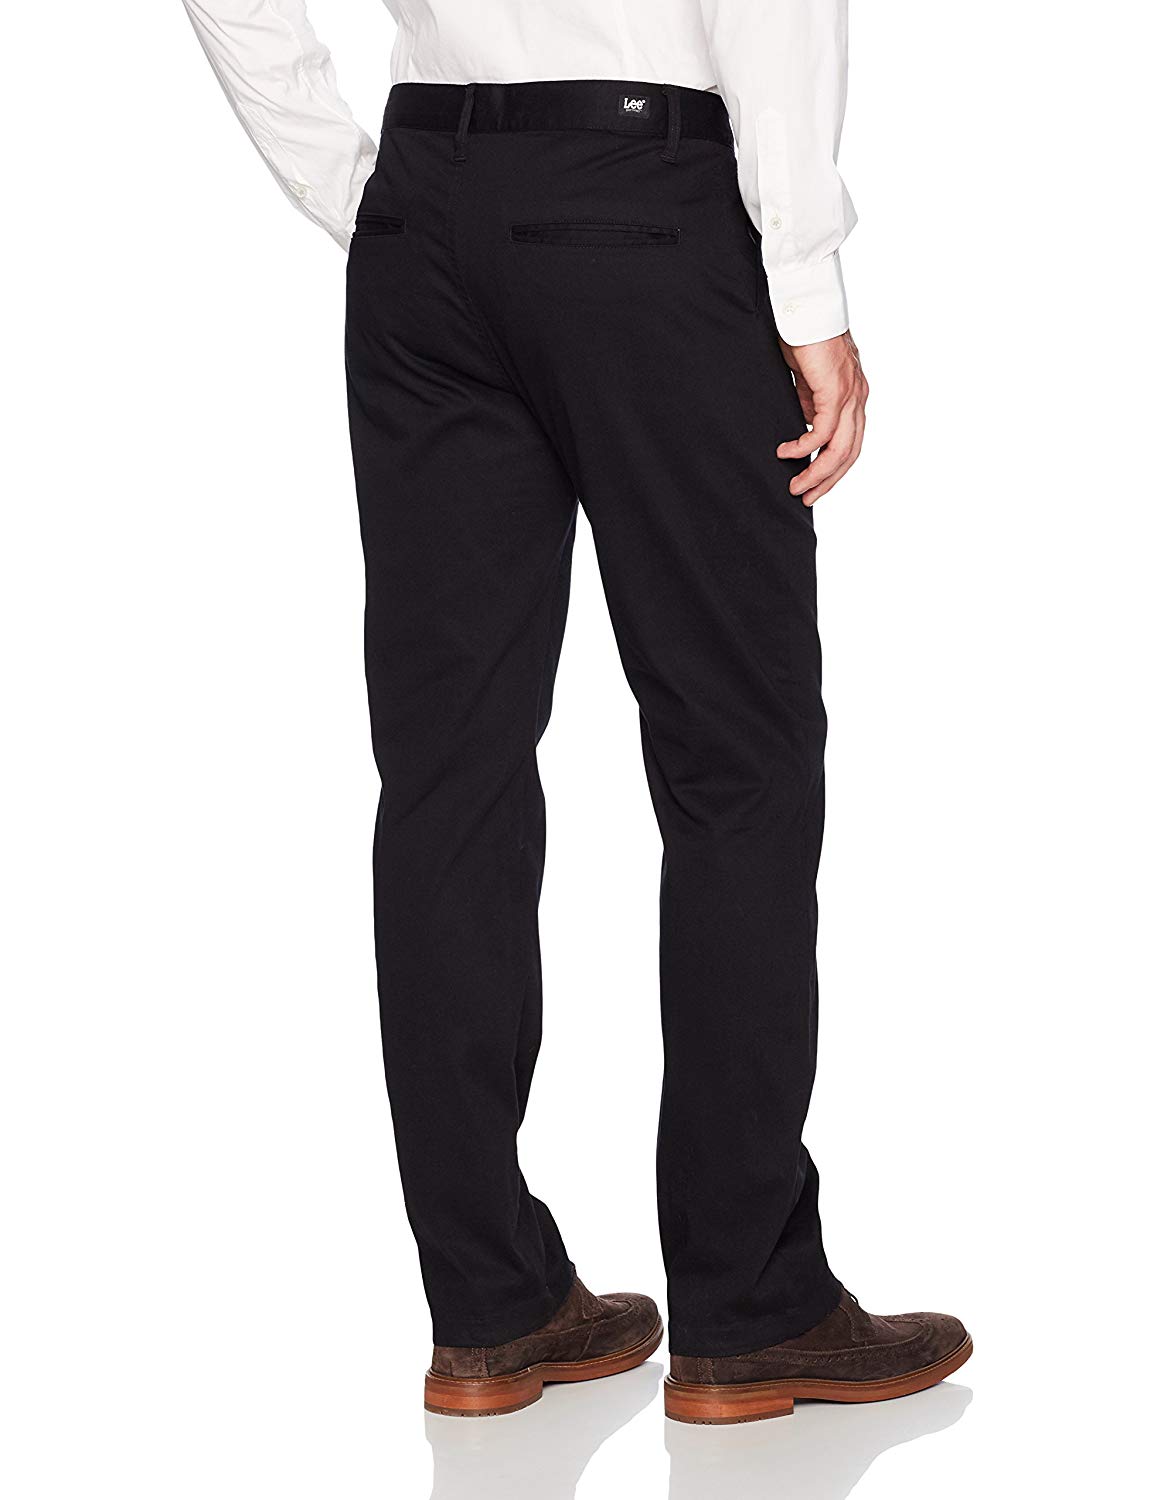 Men's Lee® Performance Series Extreme Comfort Khaki Slim-Fit Flat-Front  Pants